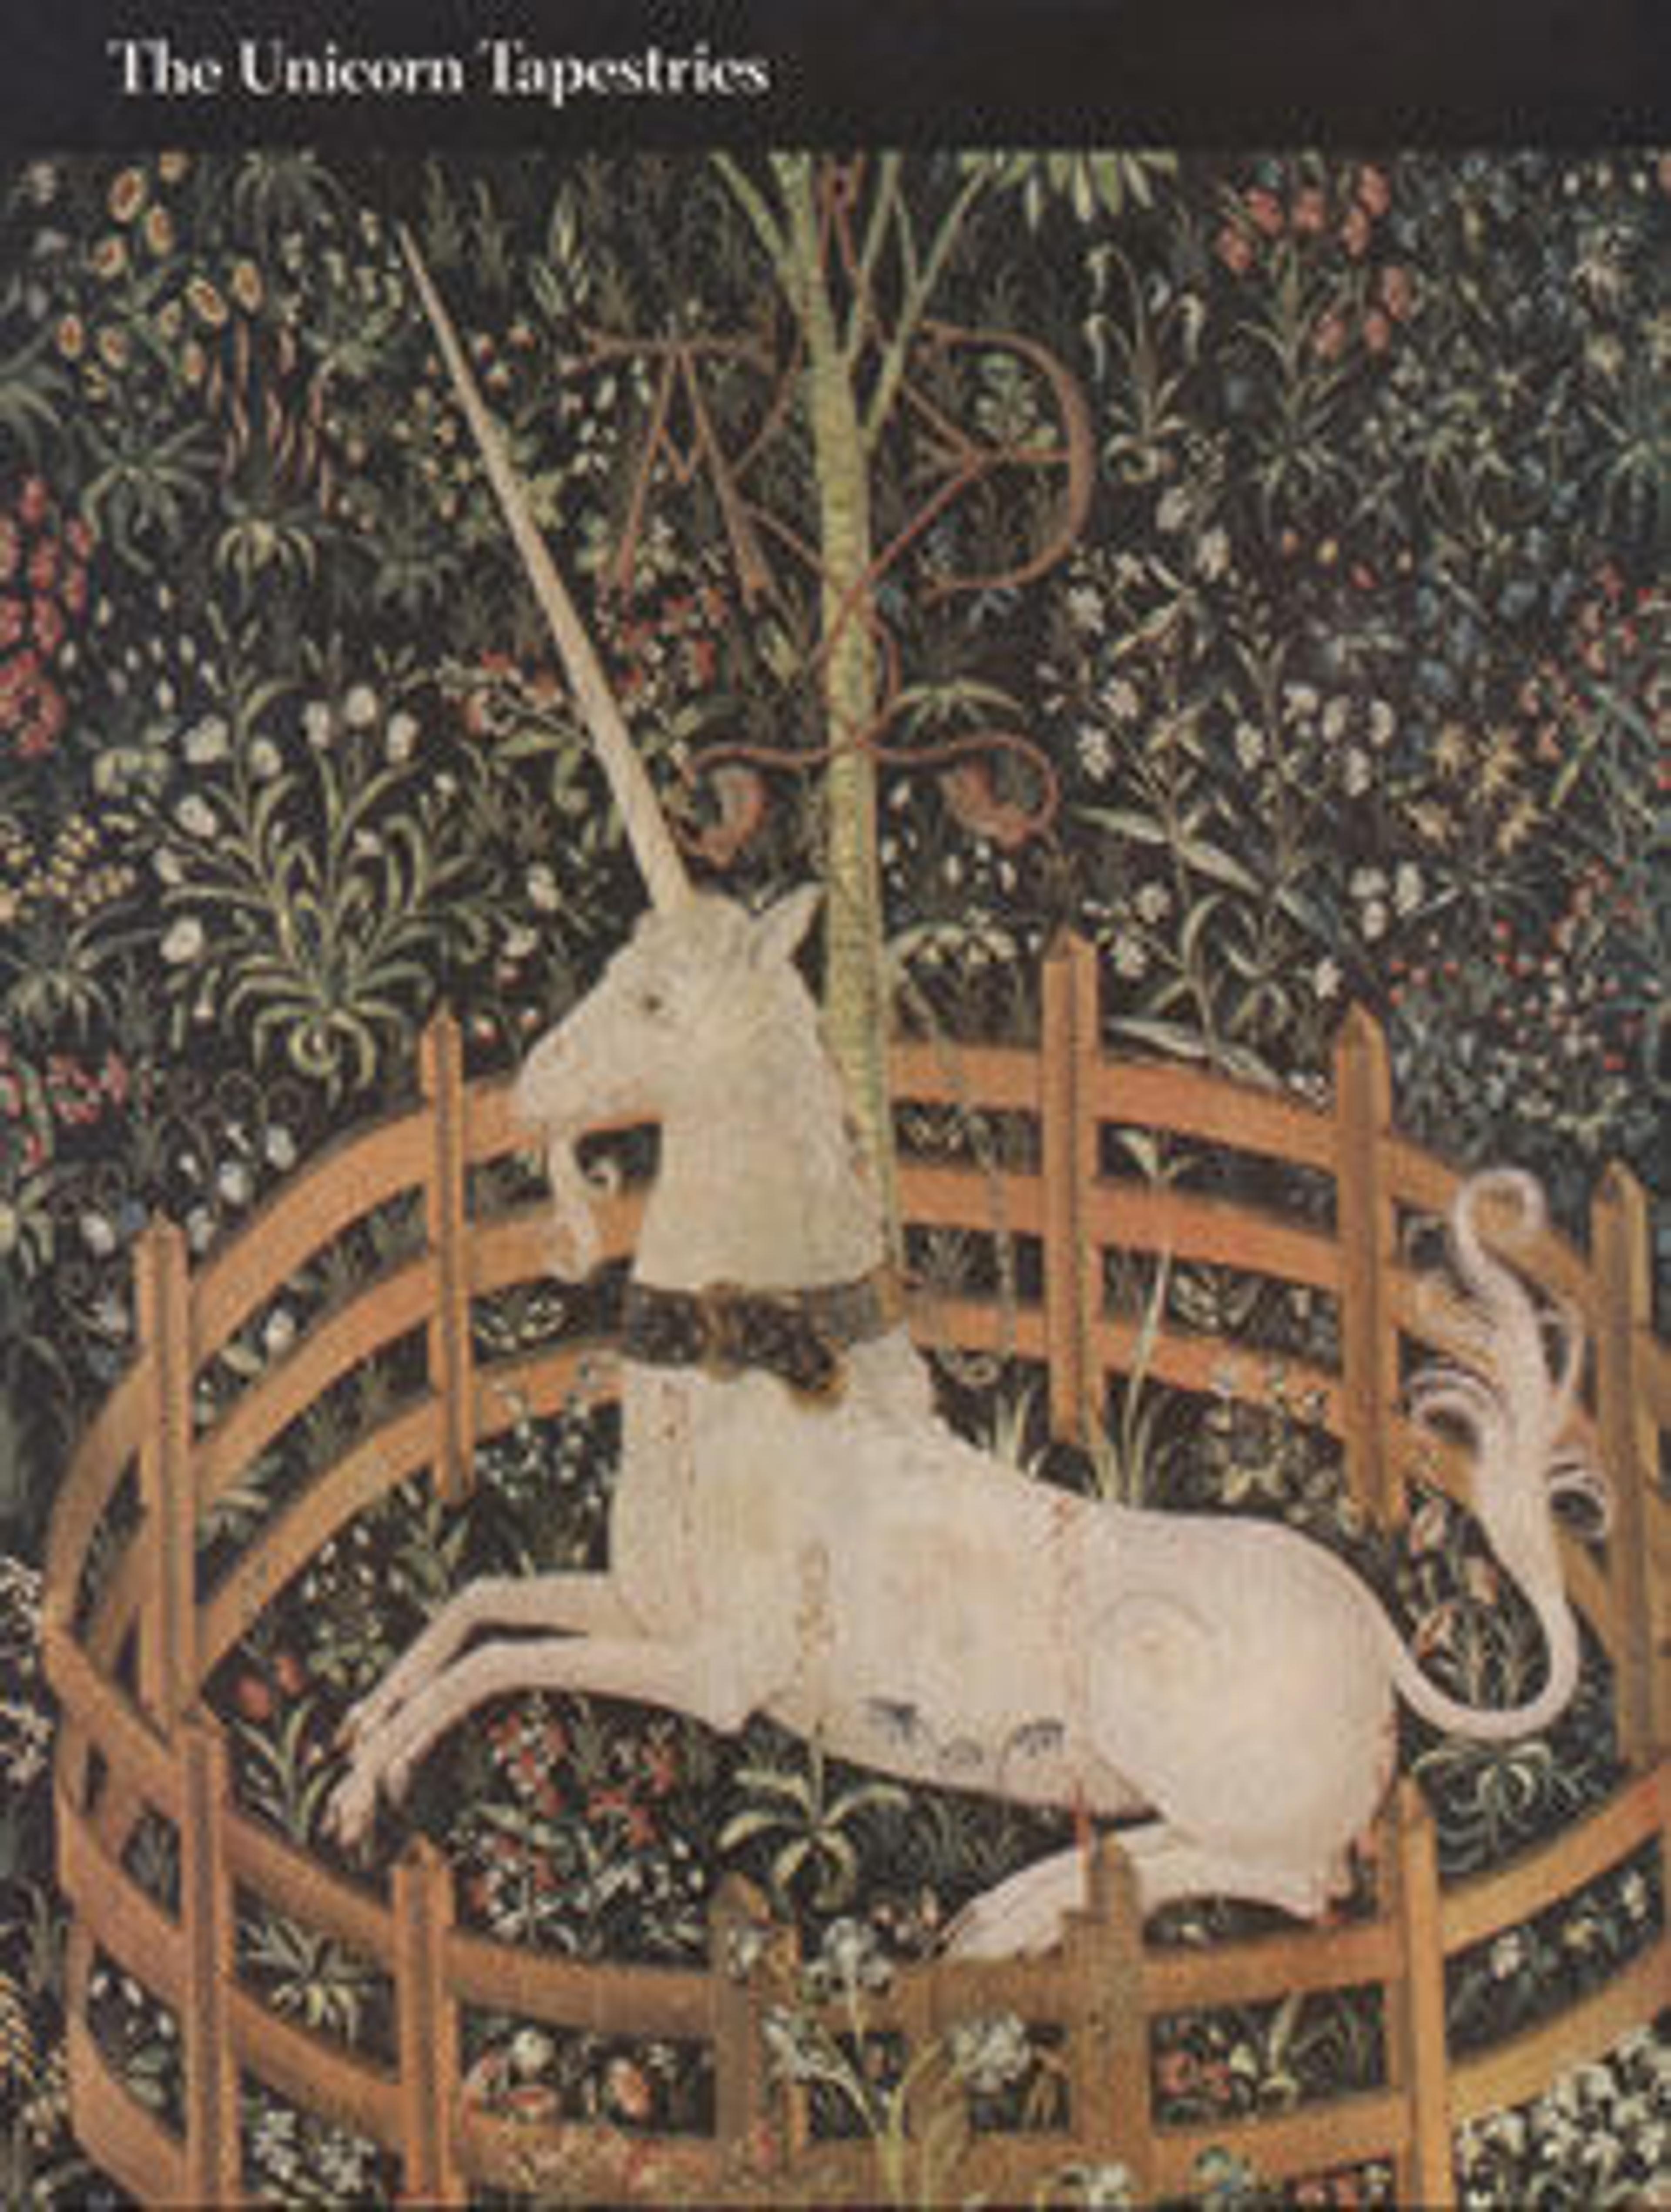 "The Unicorn Tapestries": The Metropolitan Museum of Art Bulletin, v. 32, no. 1 (1973-1974)